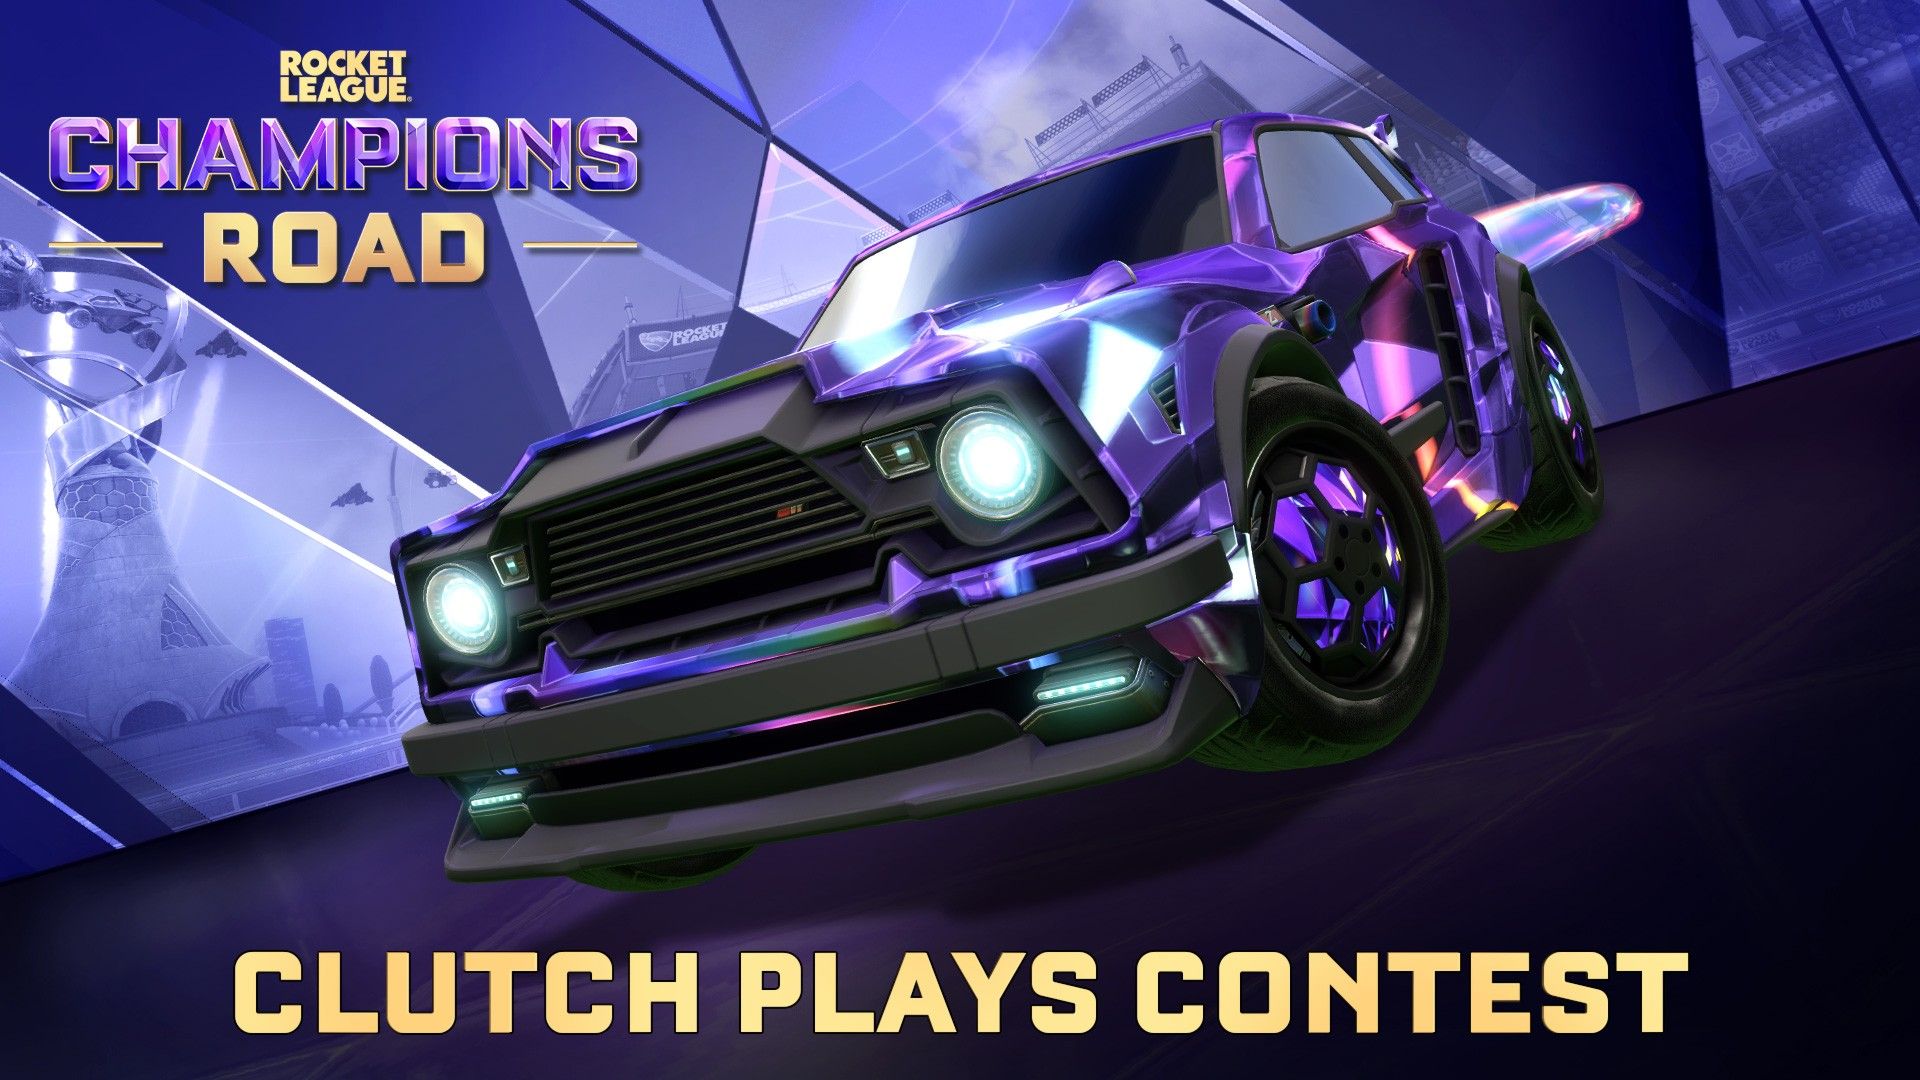 Rocket League Champions Road Clutch Plays Contest Art